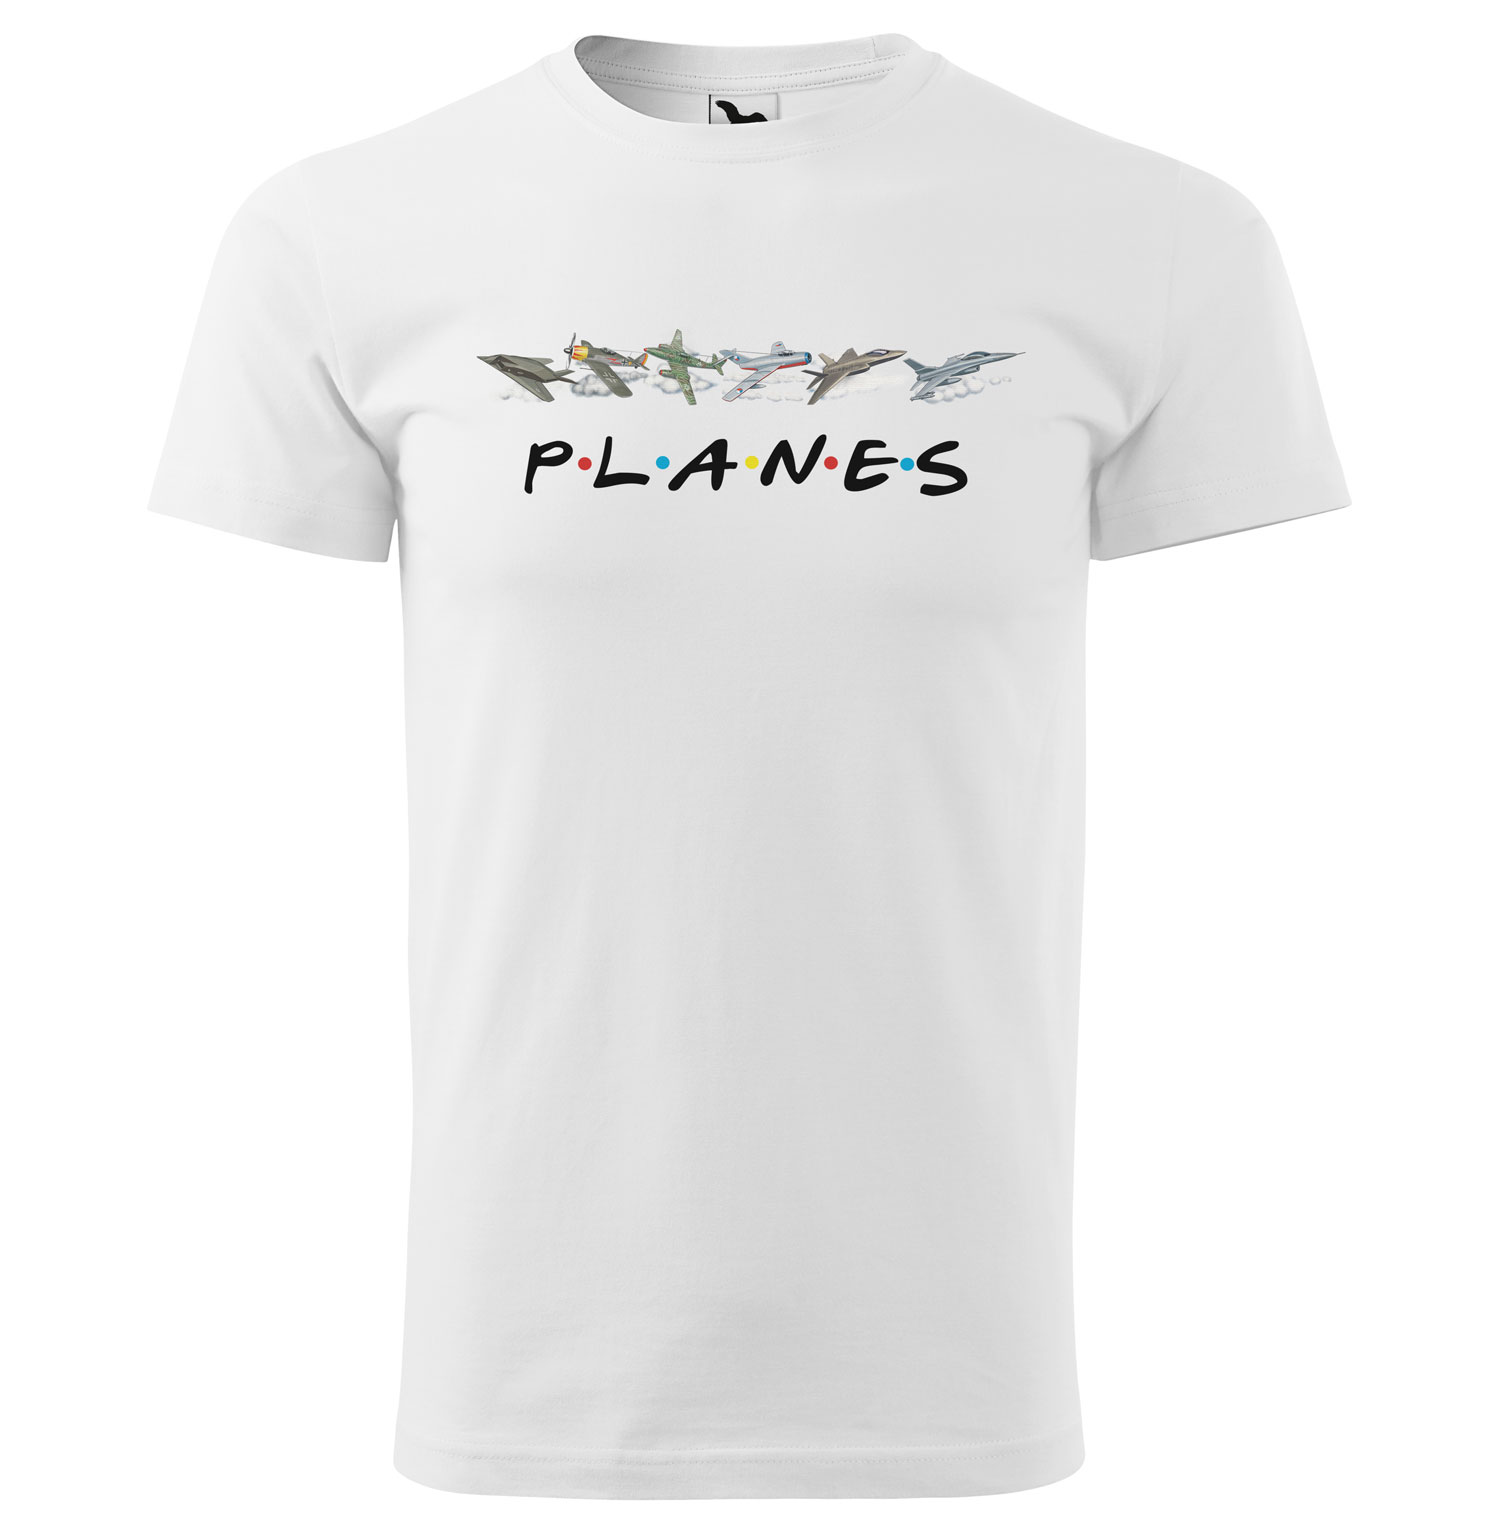 Tričko Planes (Velikost: 3XL, Typ: pro muže, Barva trička: Bílá)